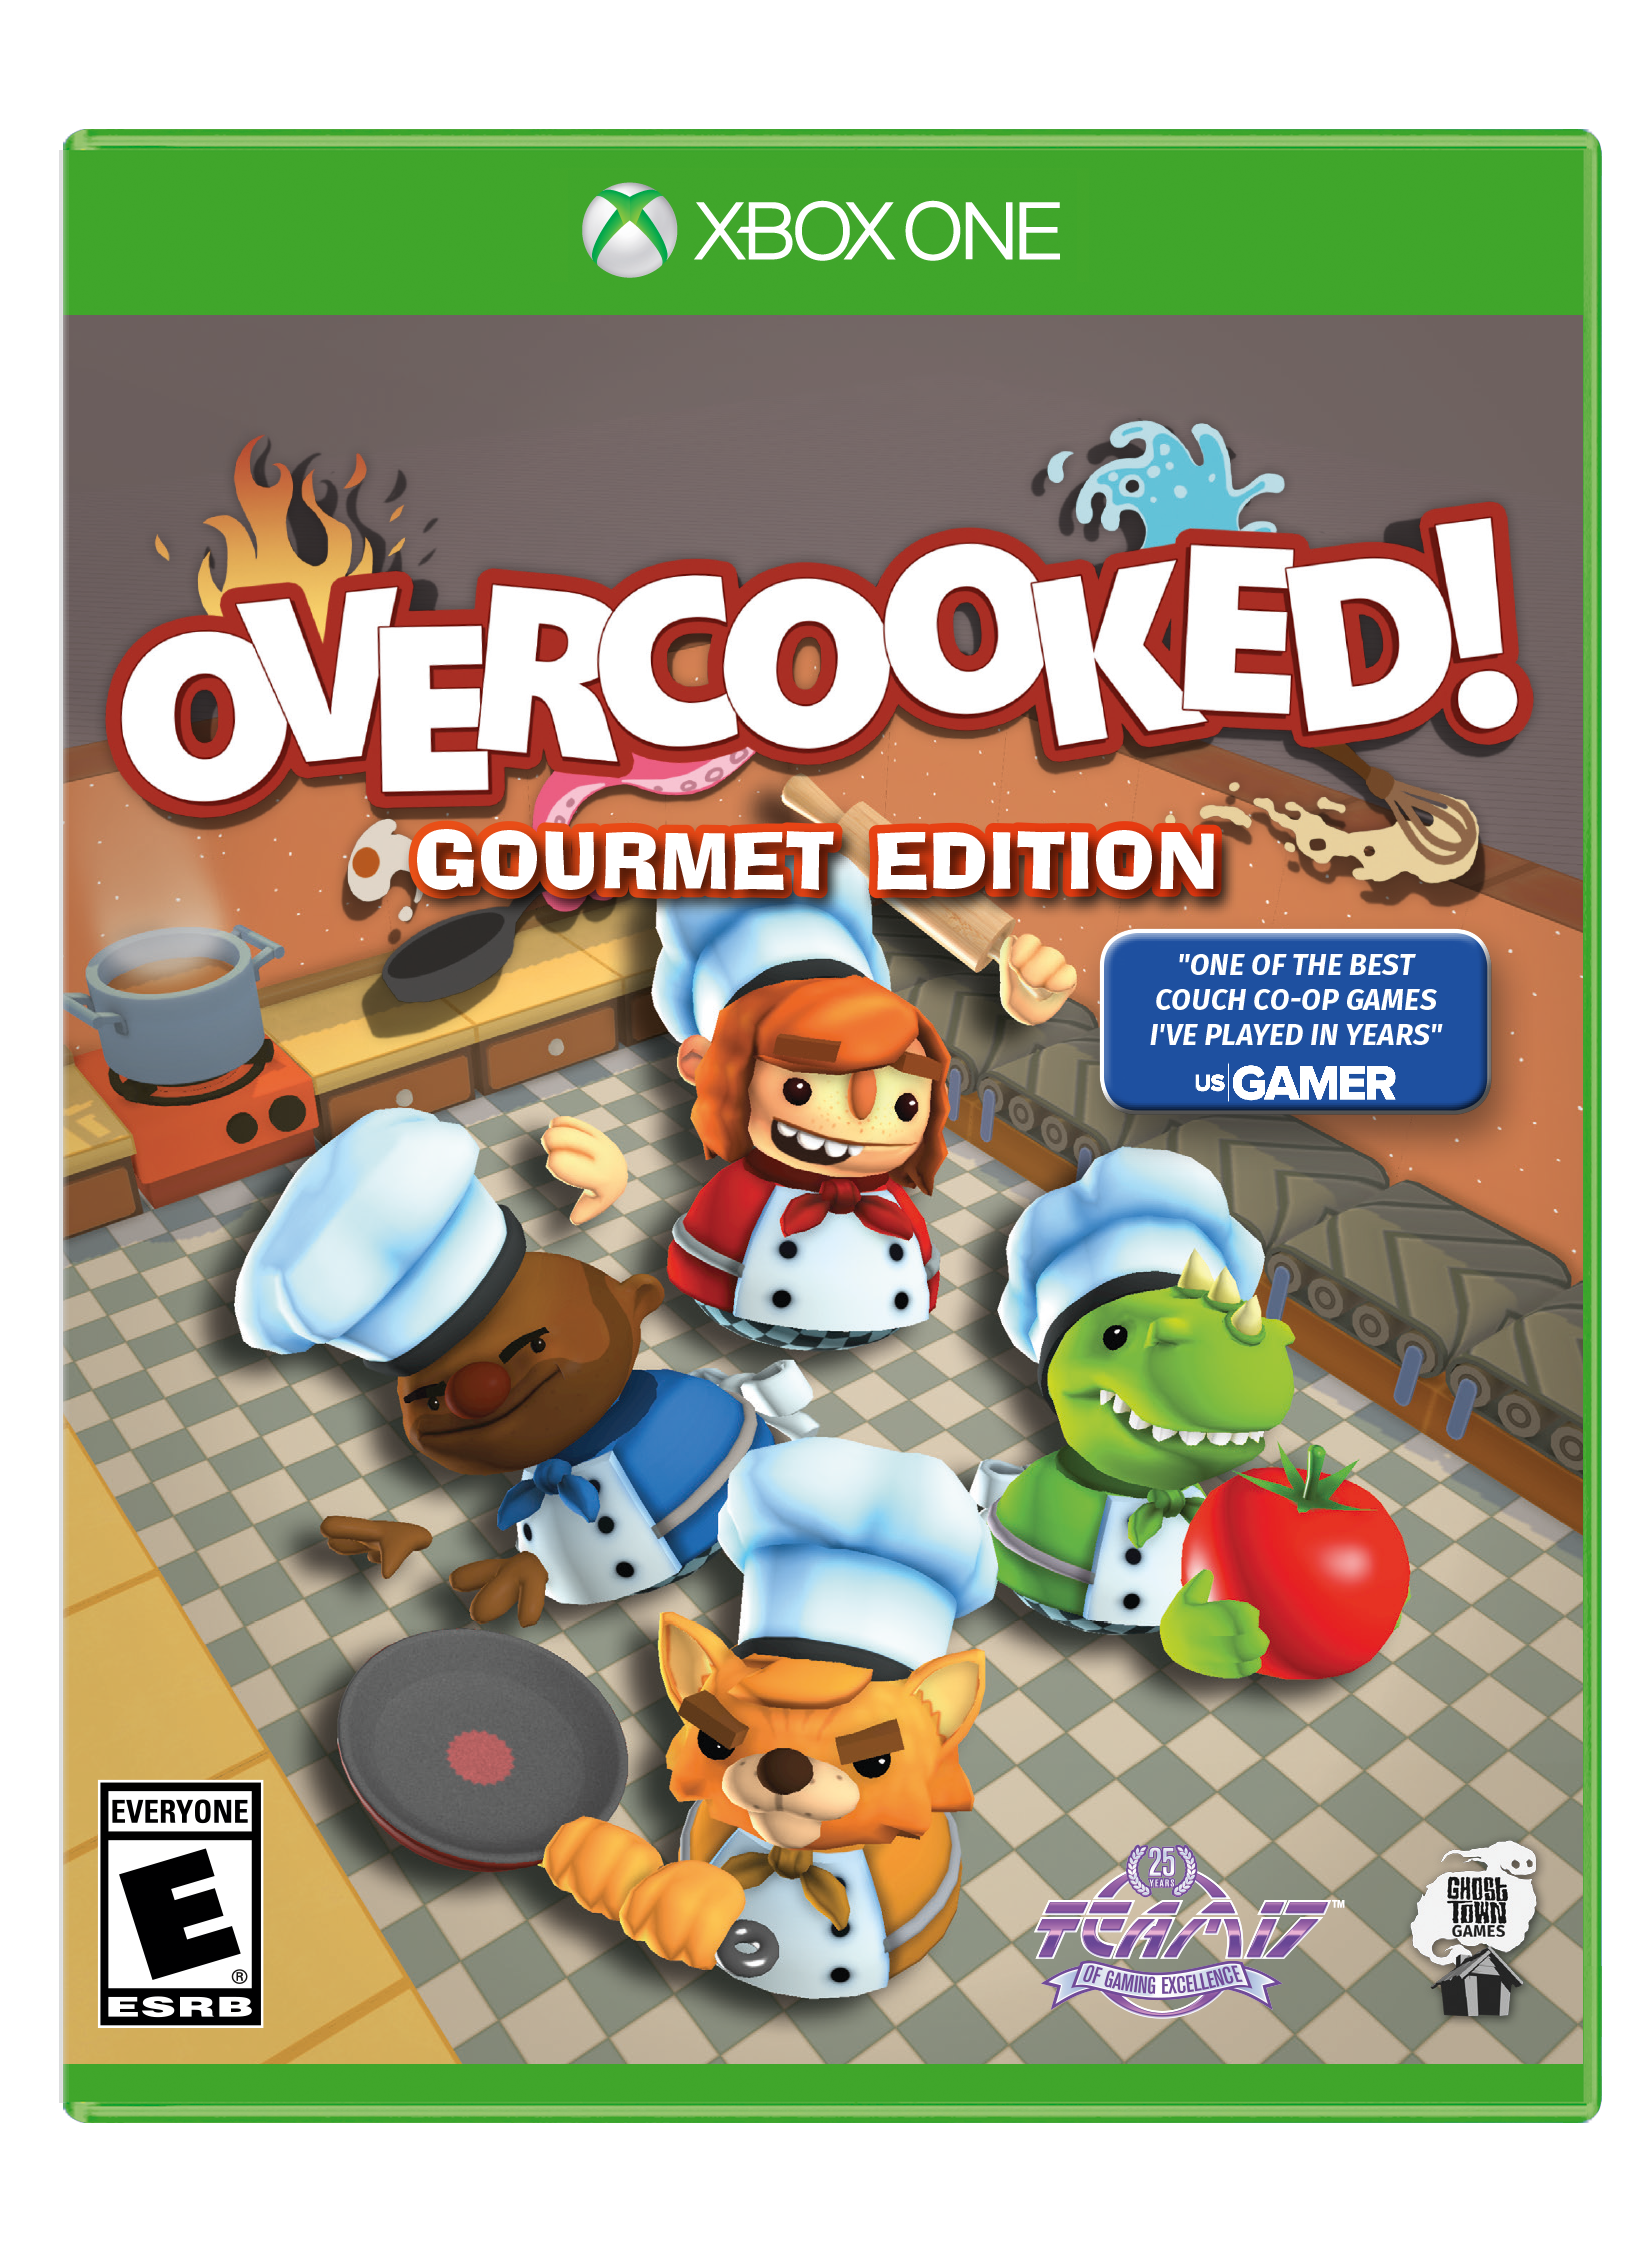 auditie ingenieur Diverse Overcooked! Gourmet Edition - Xbox One | Xbox One | GameStop